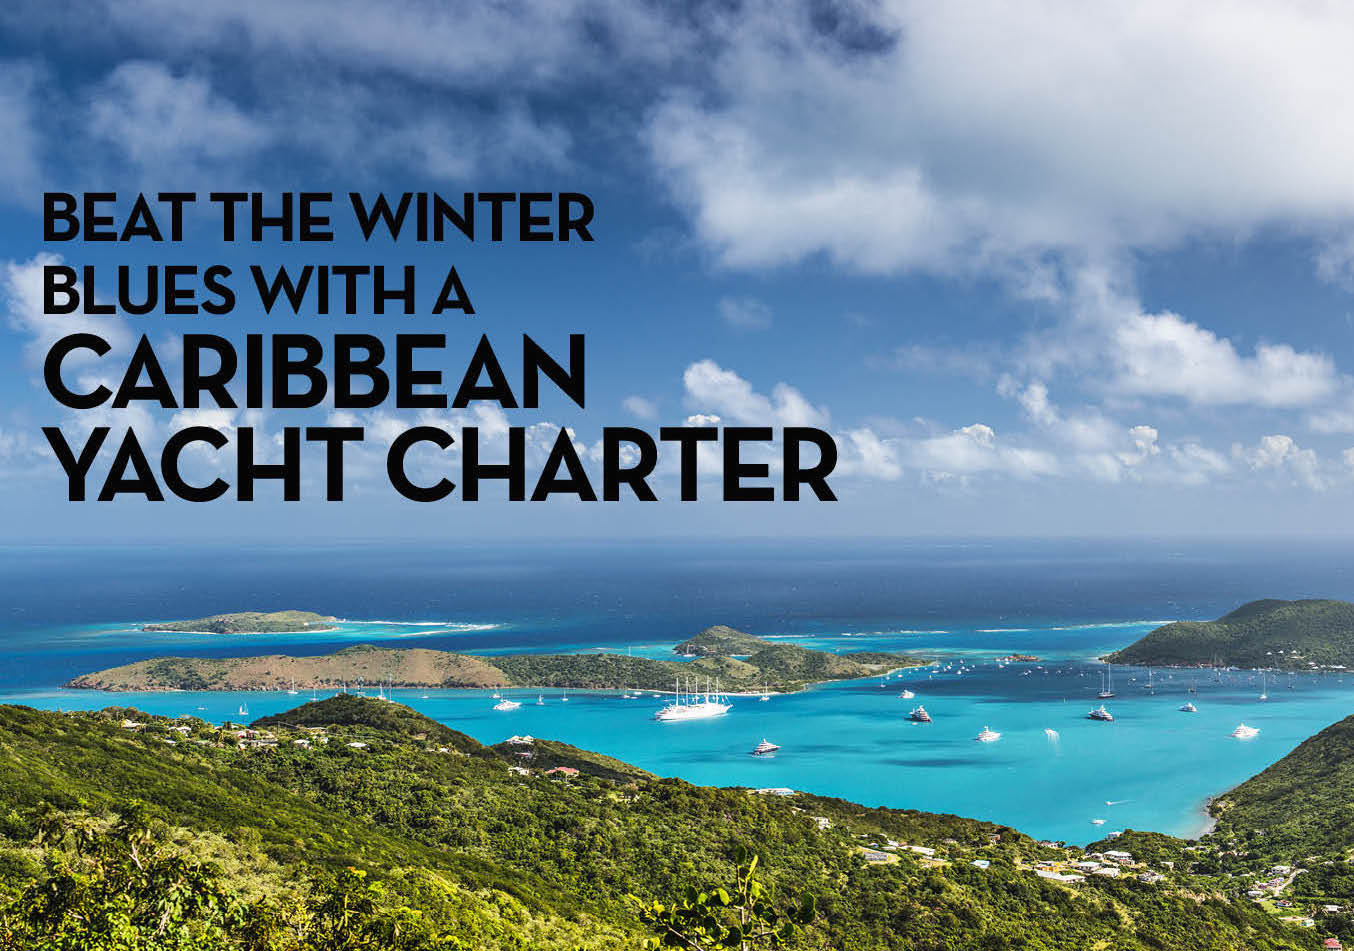 Charter Inspiration: The Caribbean